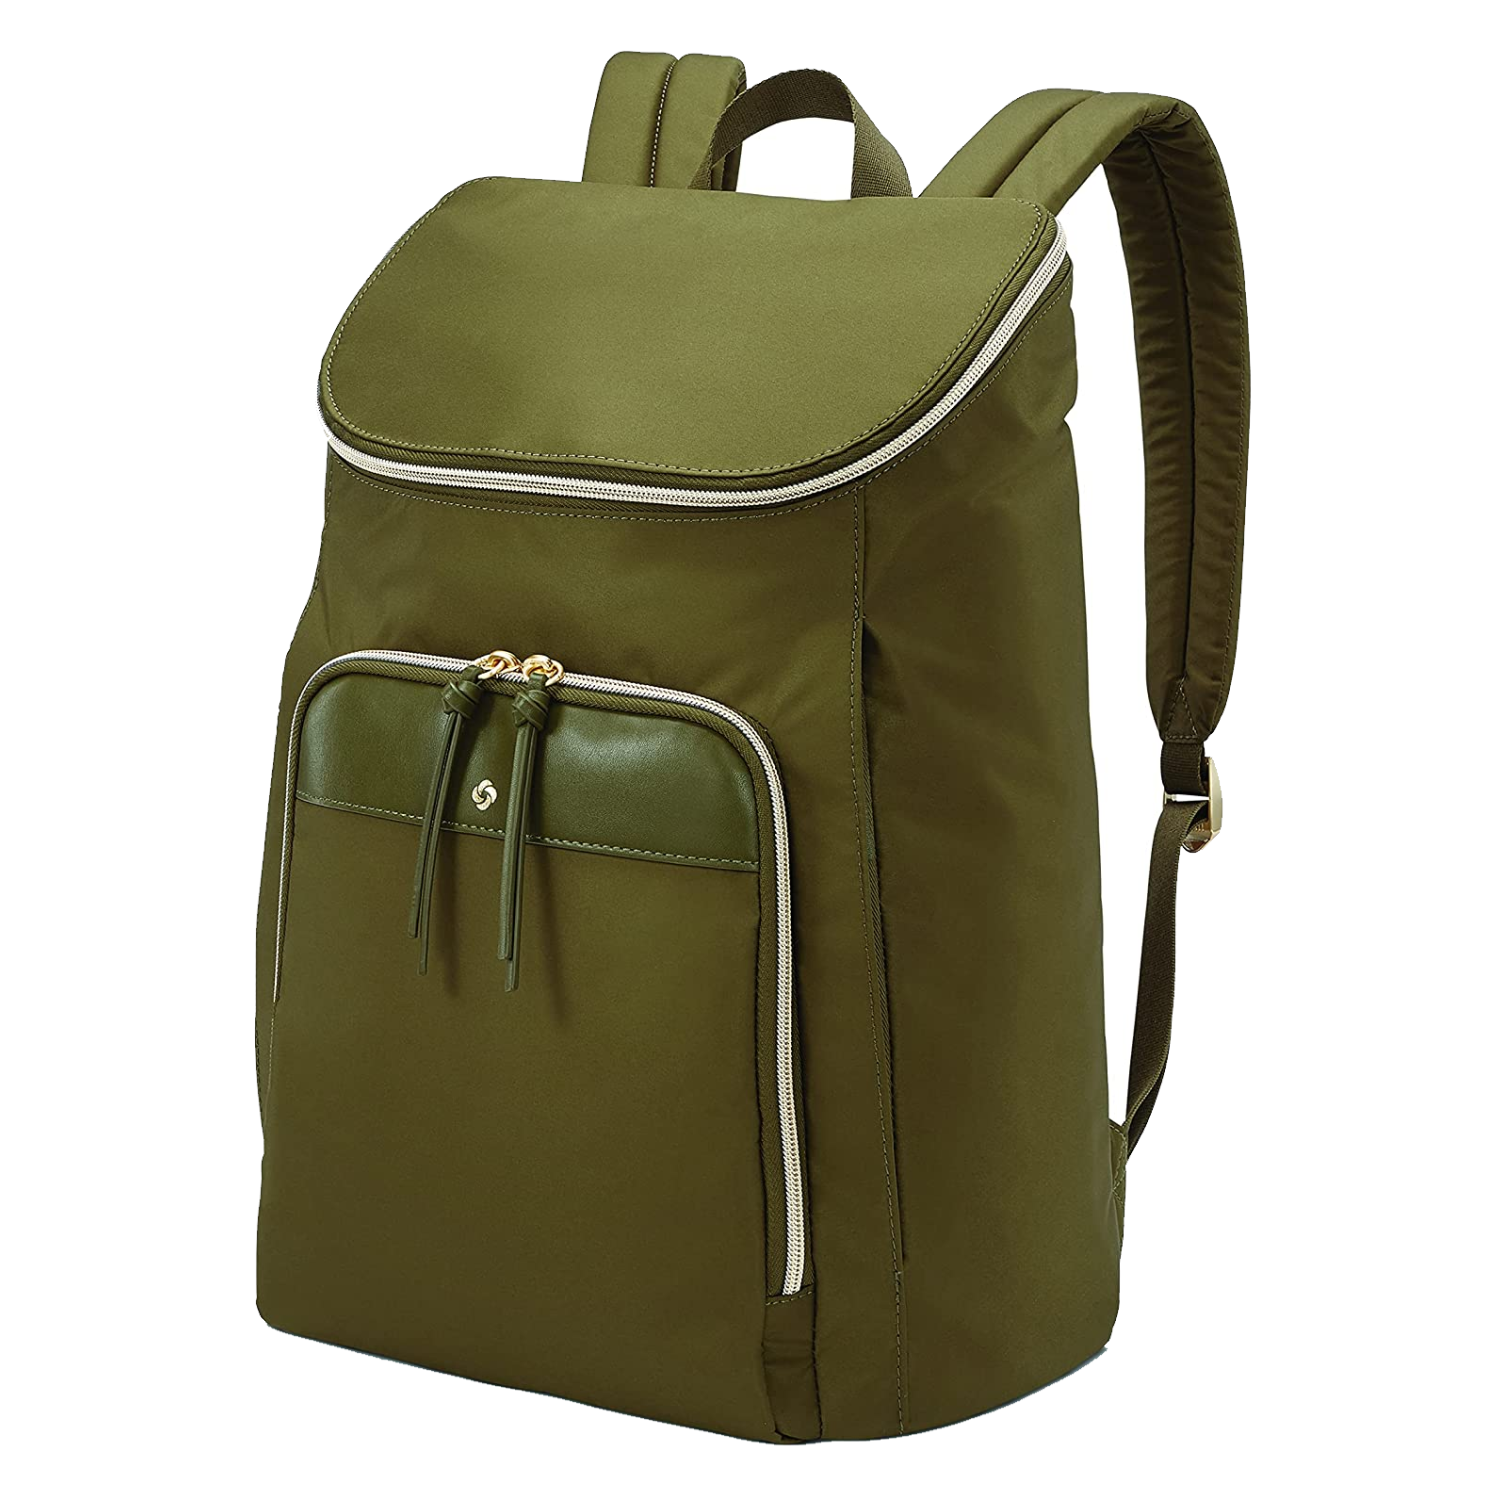 Samsonite Solutions Bucket Backpack vs JanSport Hatchet Backpack